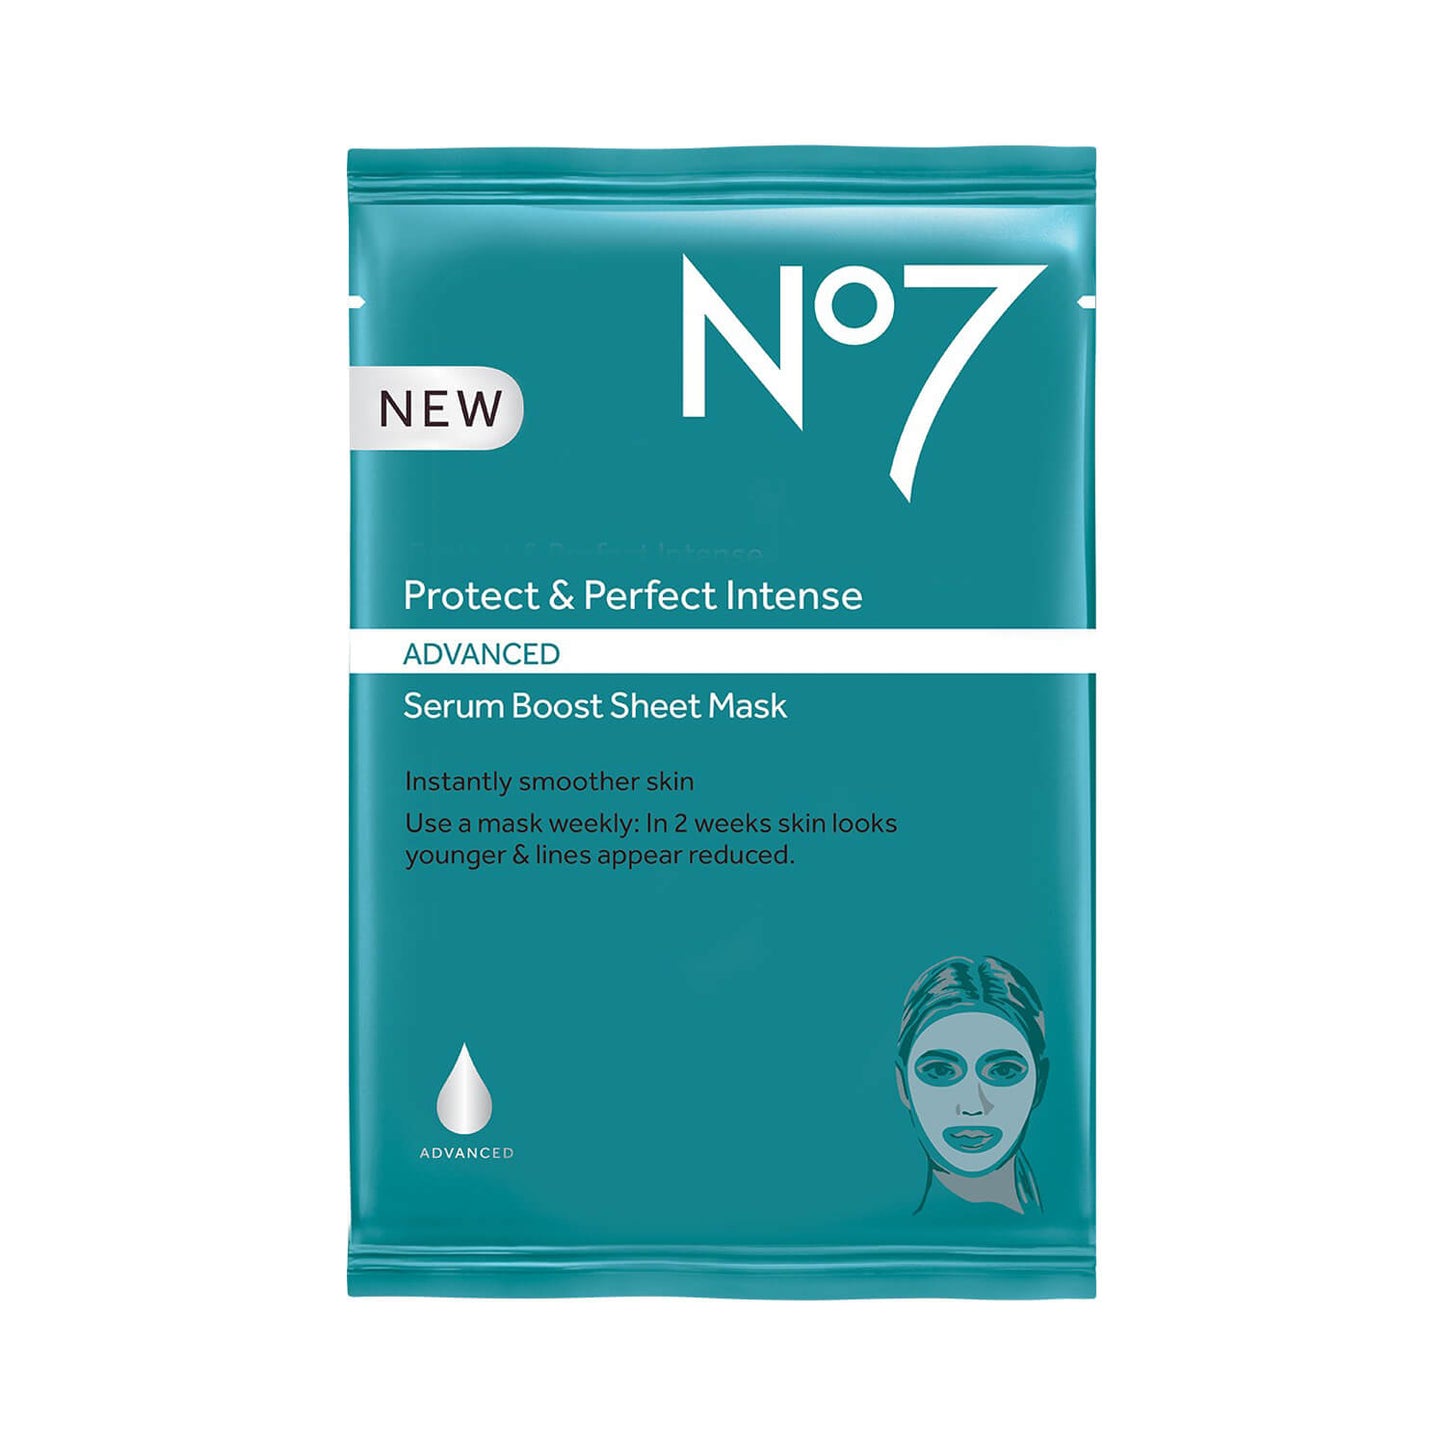 No7 Protect Perfect Intense Advanced Serum Boost Sheet Mask